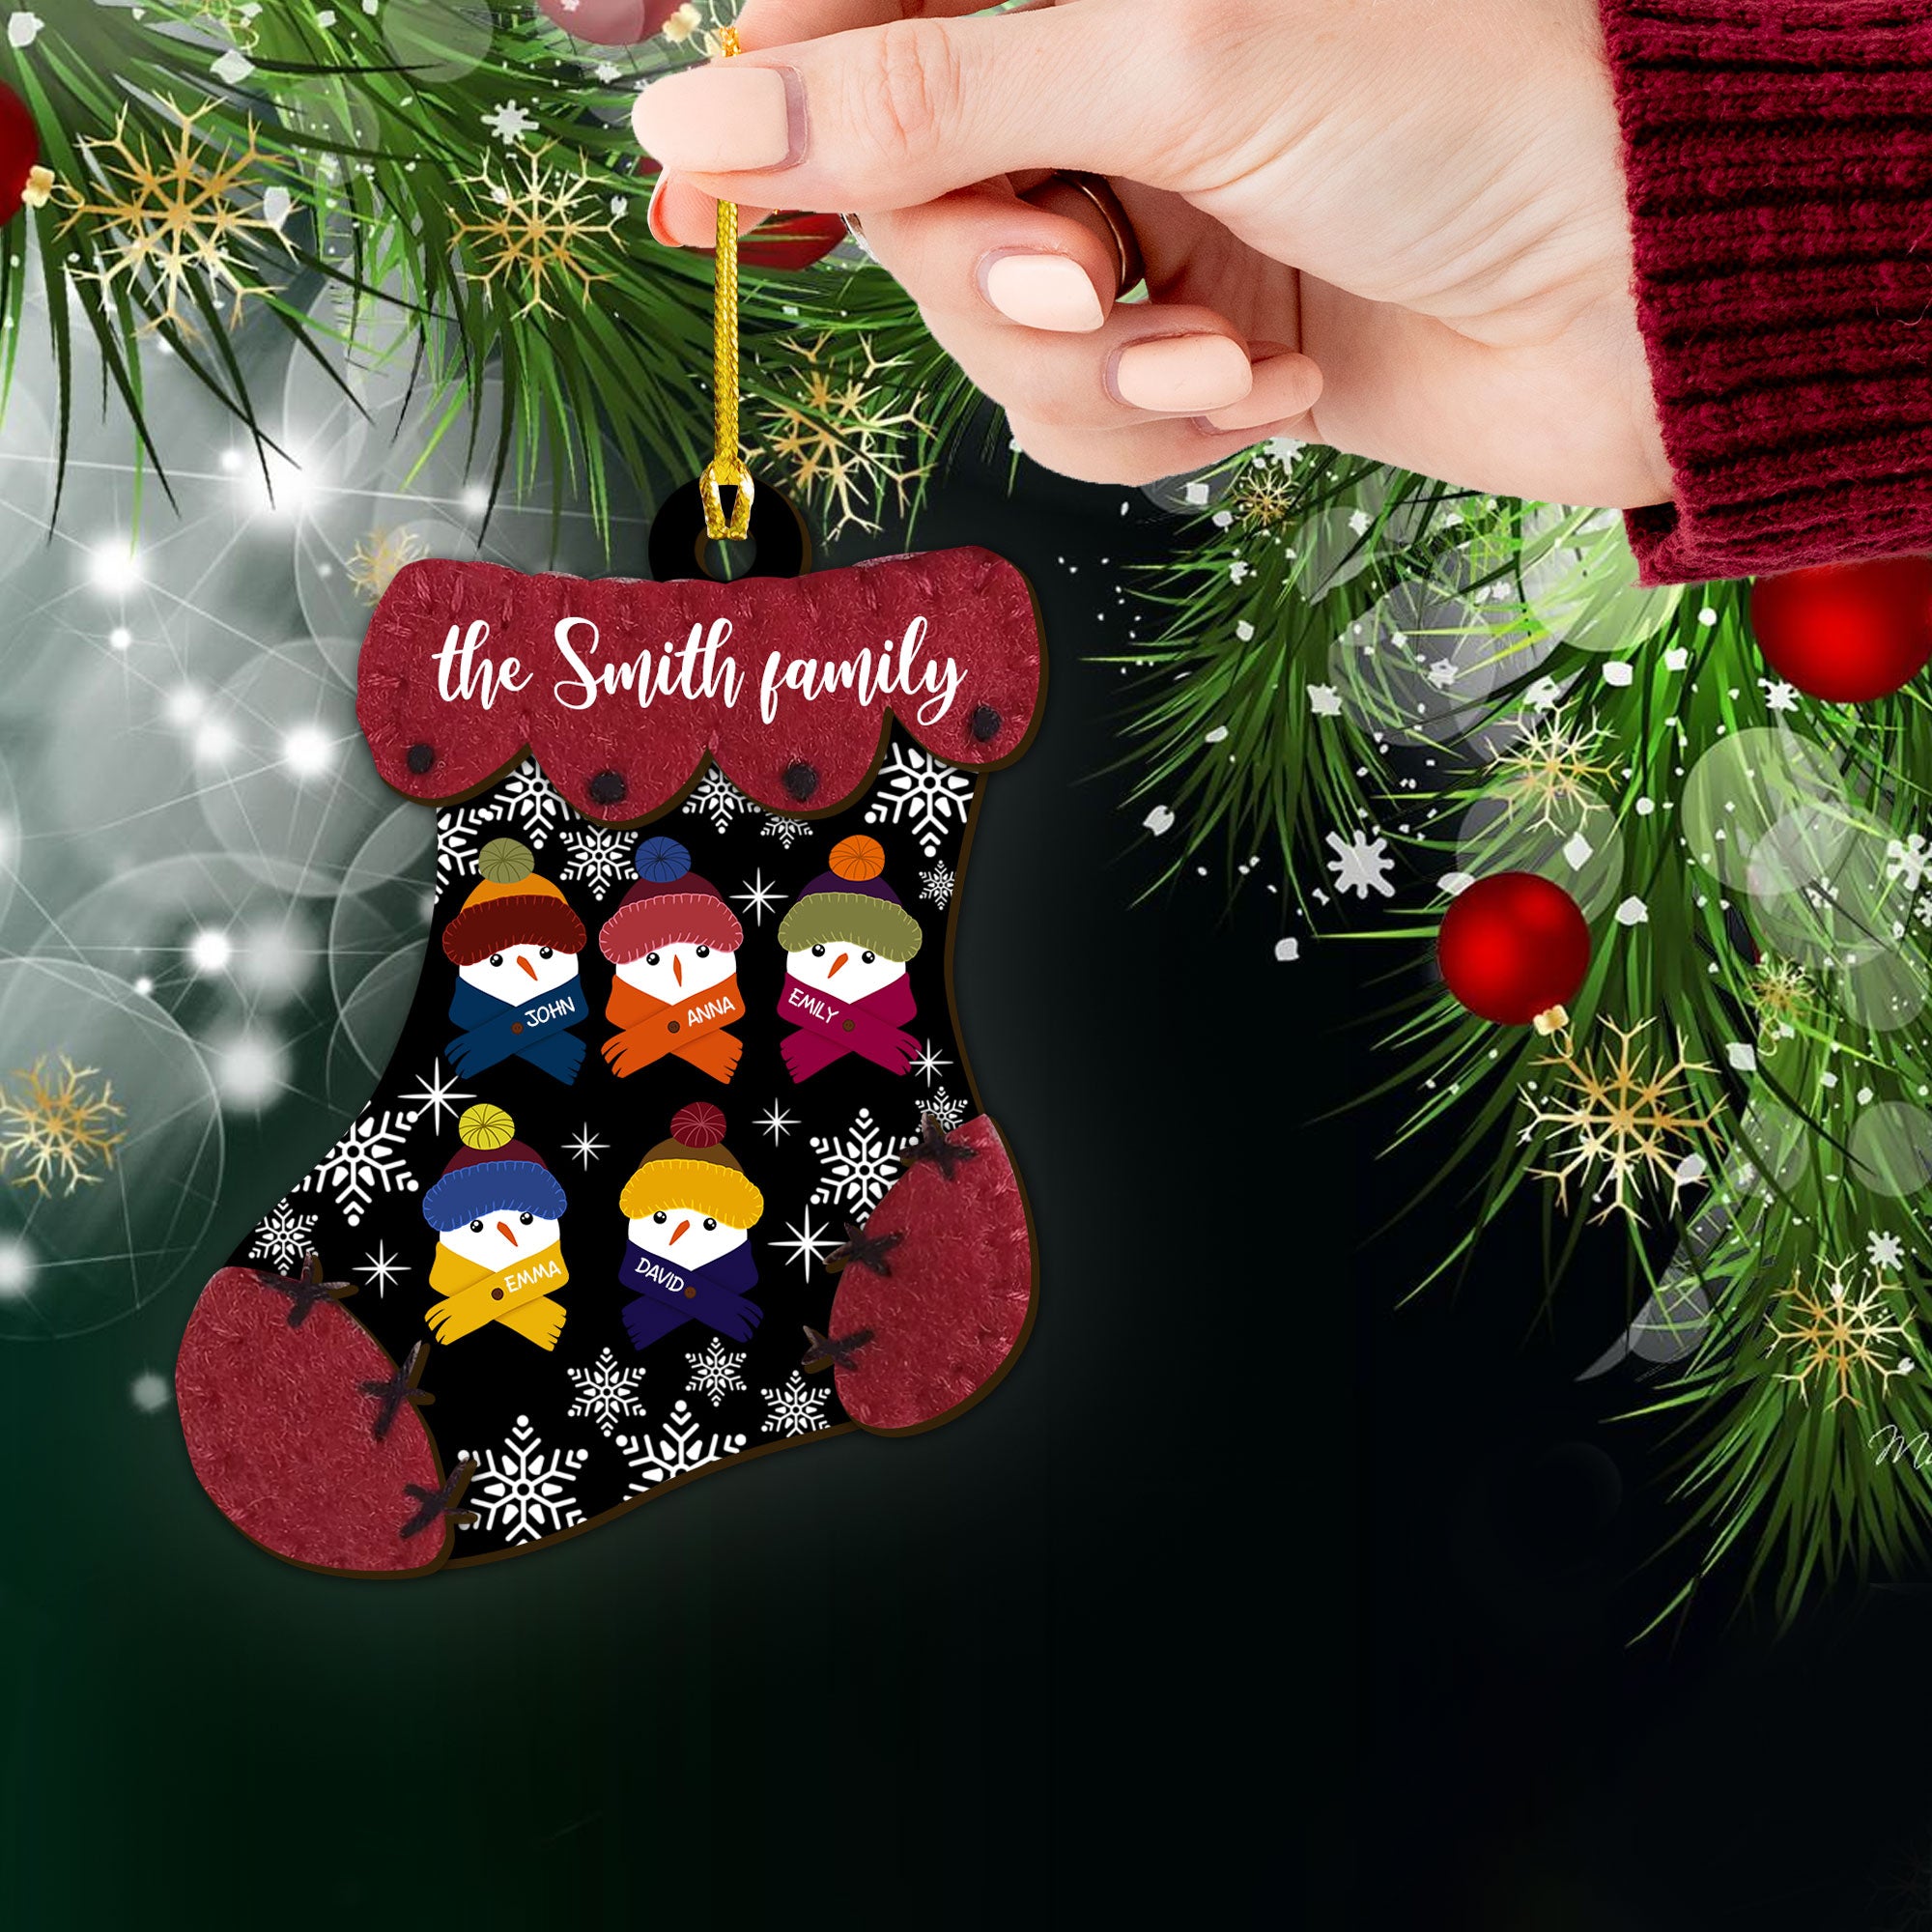 Family Snowman In Christmas Sock - Custom Shape Wood Ornament - 1 Layered Wood Ornament